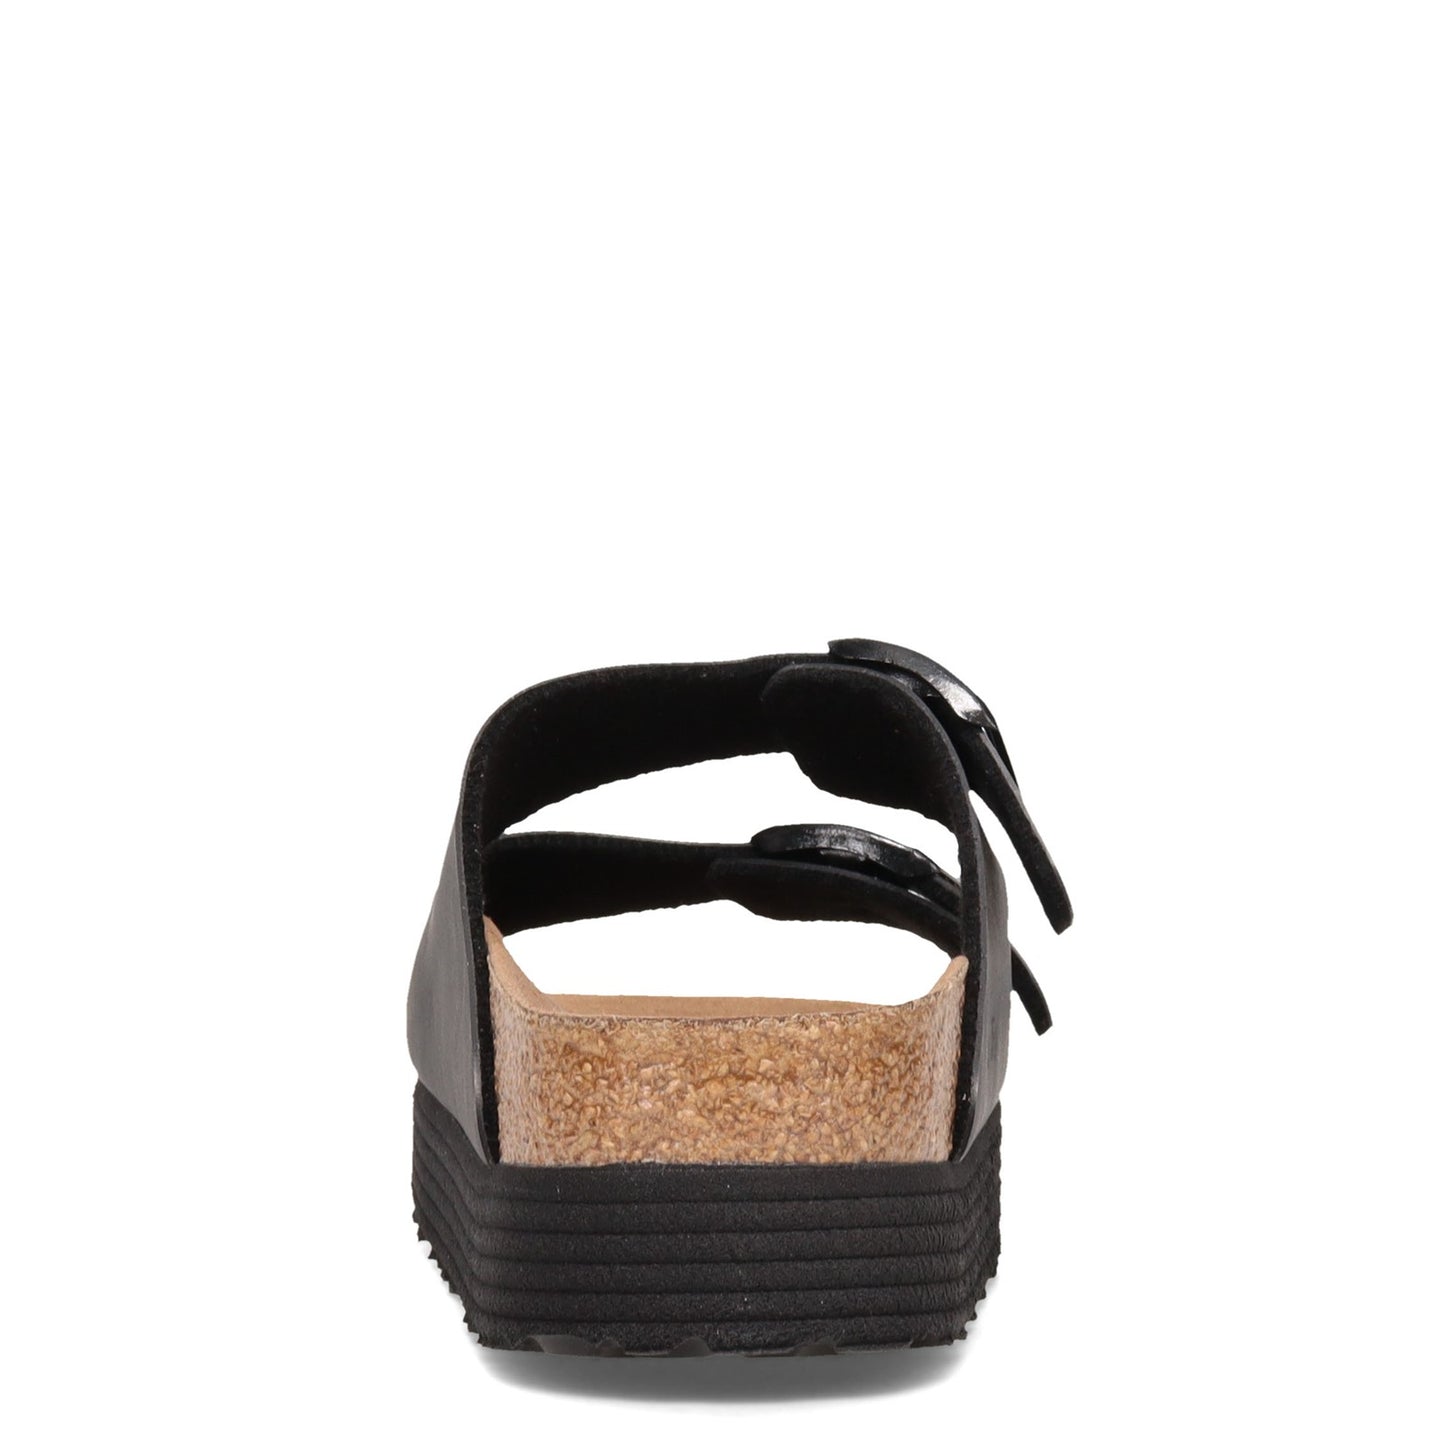 Peltz Shoes  Women's Birkenstock Arizona Platform Sandal - Narrow Width BLACK 1018 520 N